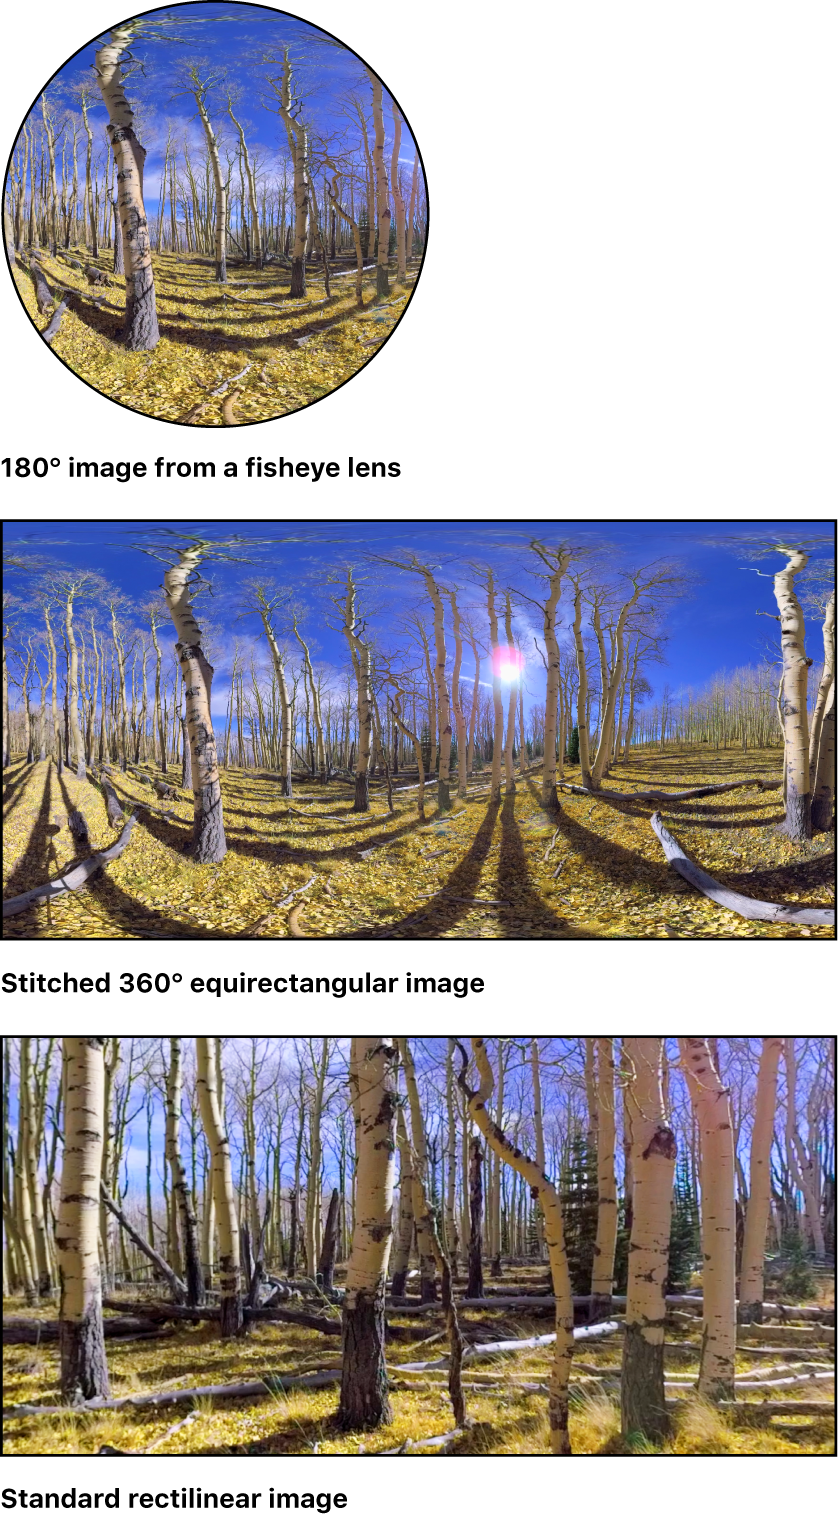 Image fisheye simple, image 360° assemblée et image rectiligne standard